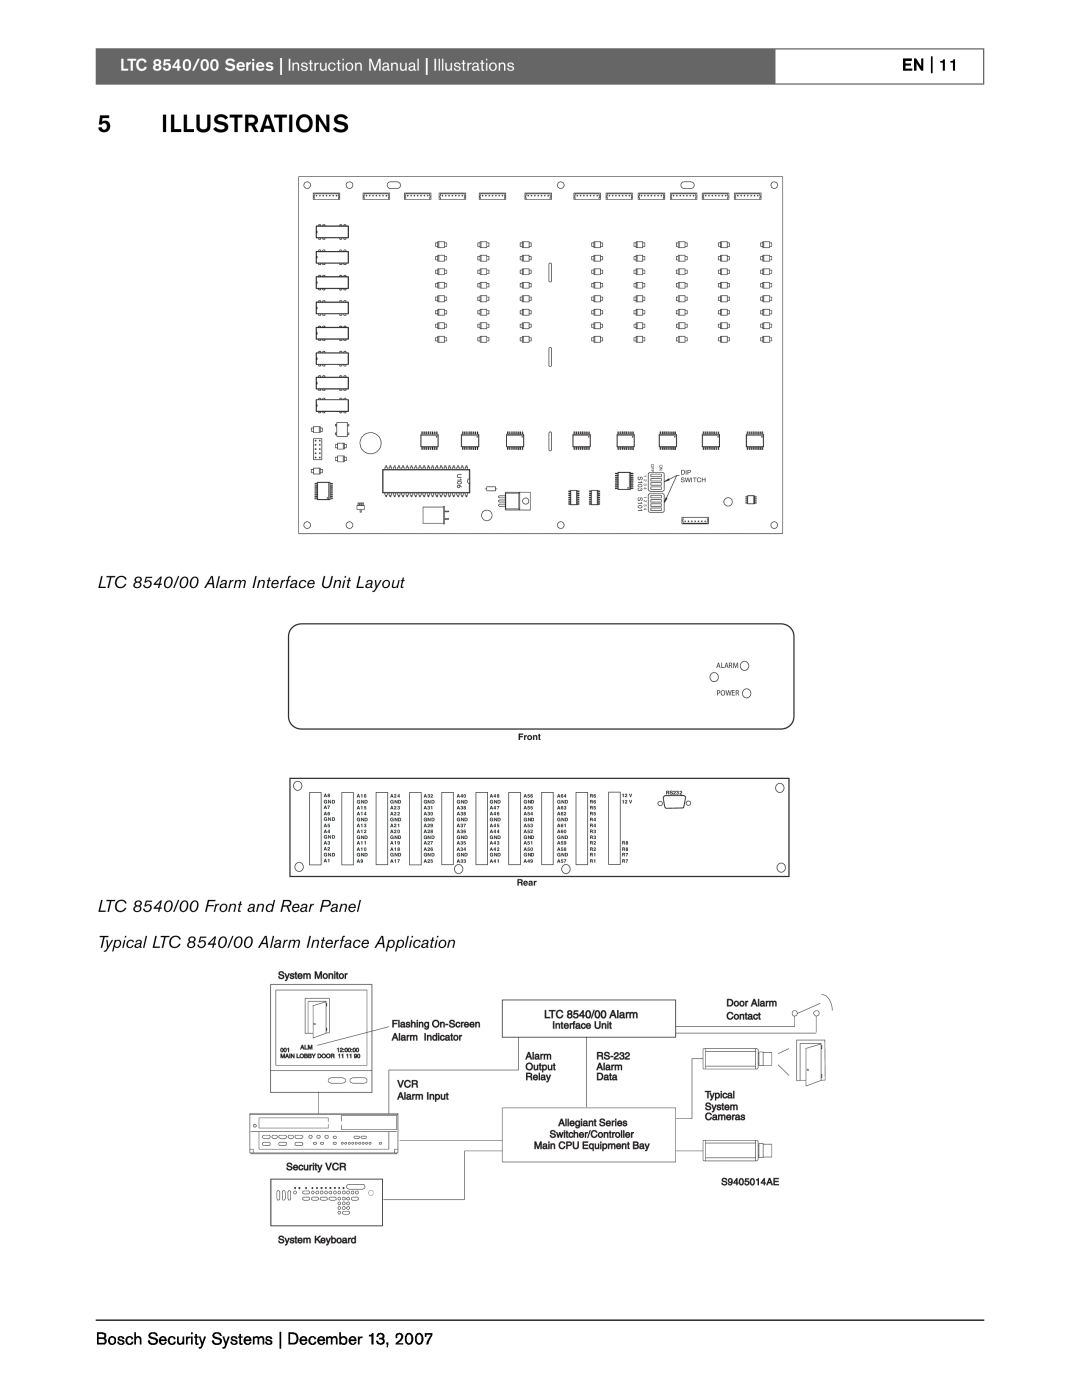 Bosch Appliances LTC 8540/00 instruction manual 5ILLUSTRATIONS, En, Bosch Security Systems December 